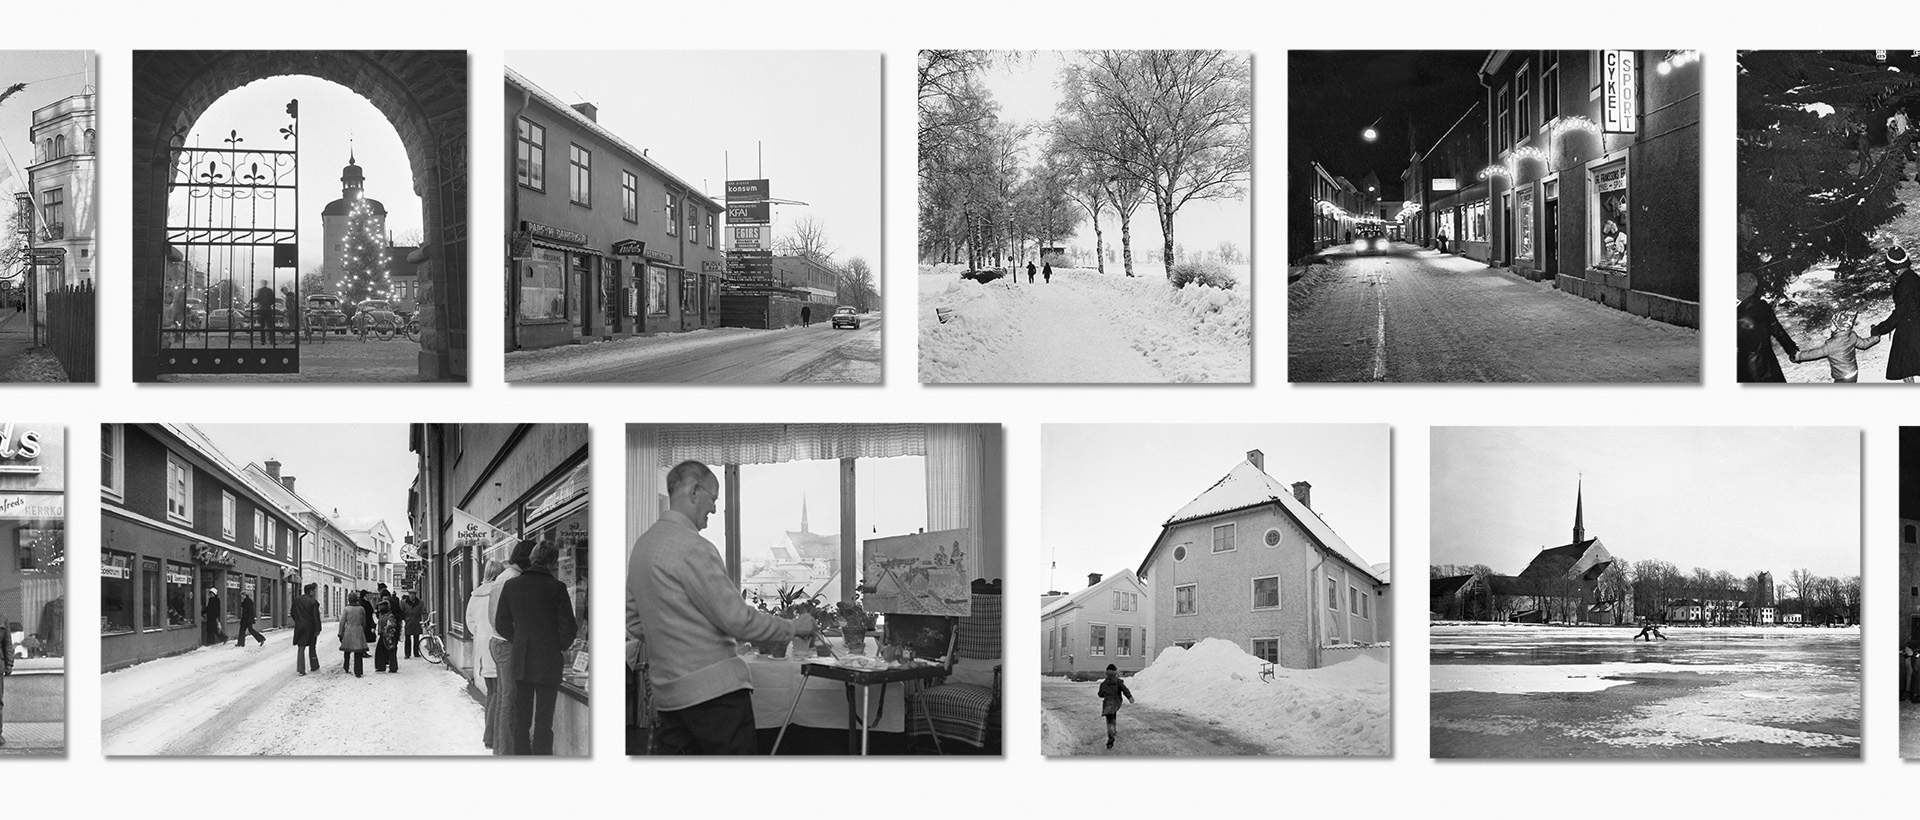 Sancta Birgitta Klostermuseum: What is hidden in the snow (9 December - 31 March)